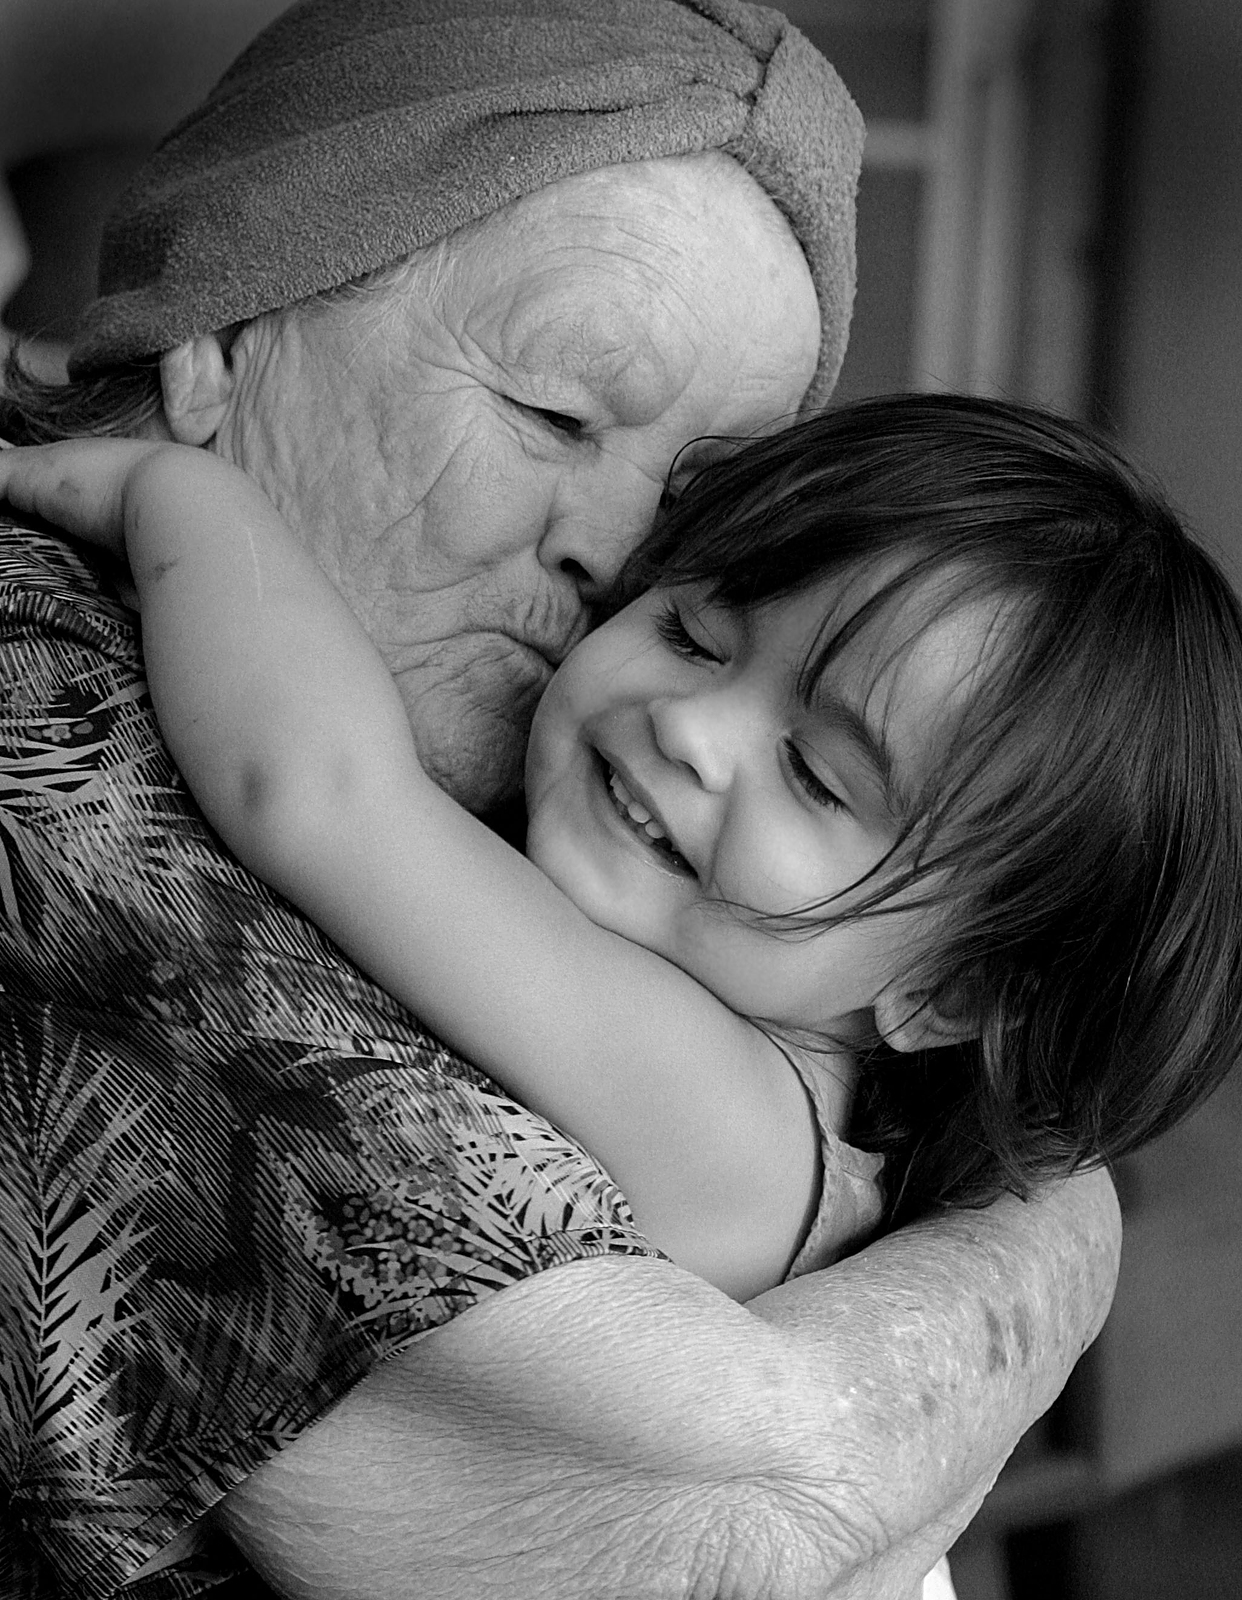 Старики внучку видео. Бабушка обнимает. Трогательные обнимашки. Бабушка обнимает внука. Бабушка и внучка.